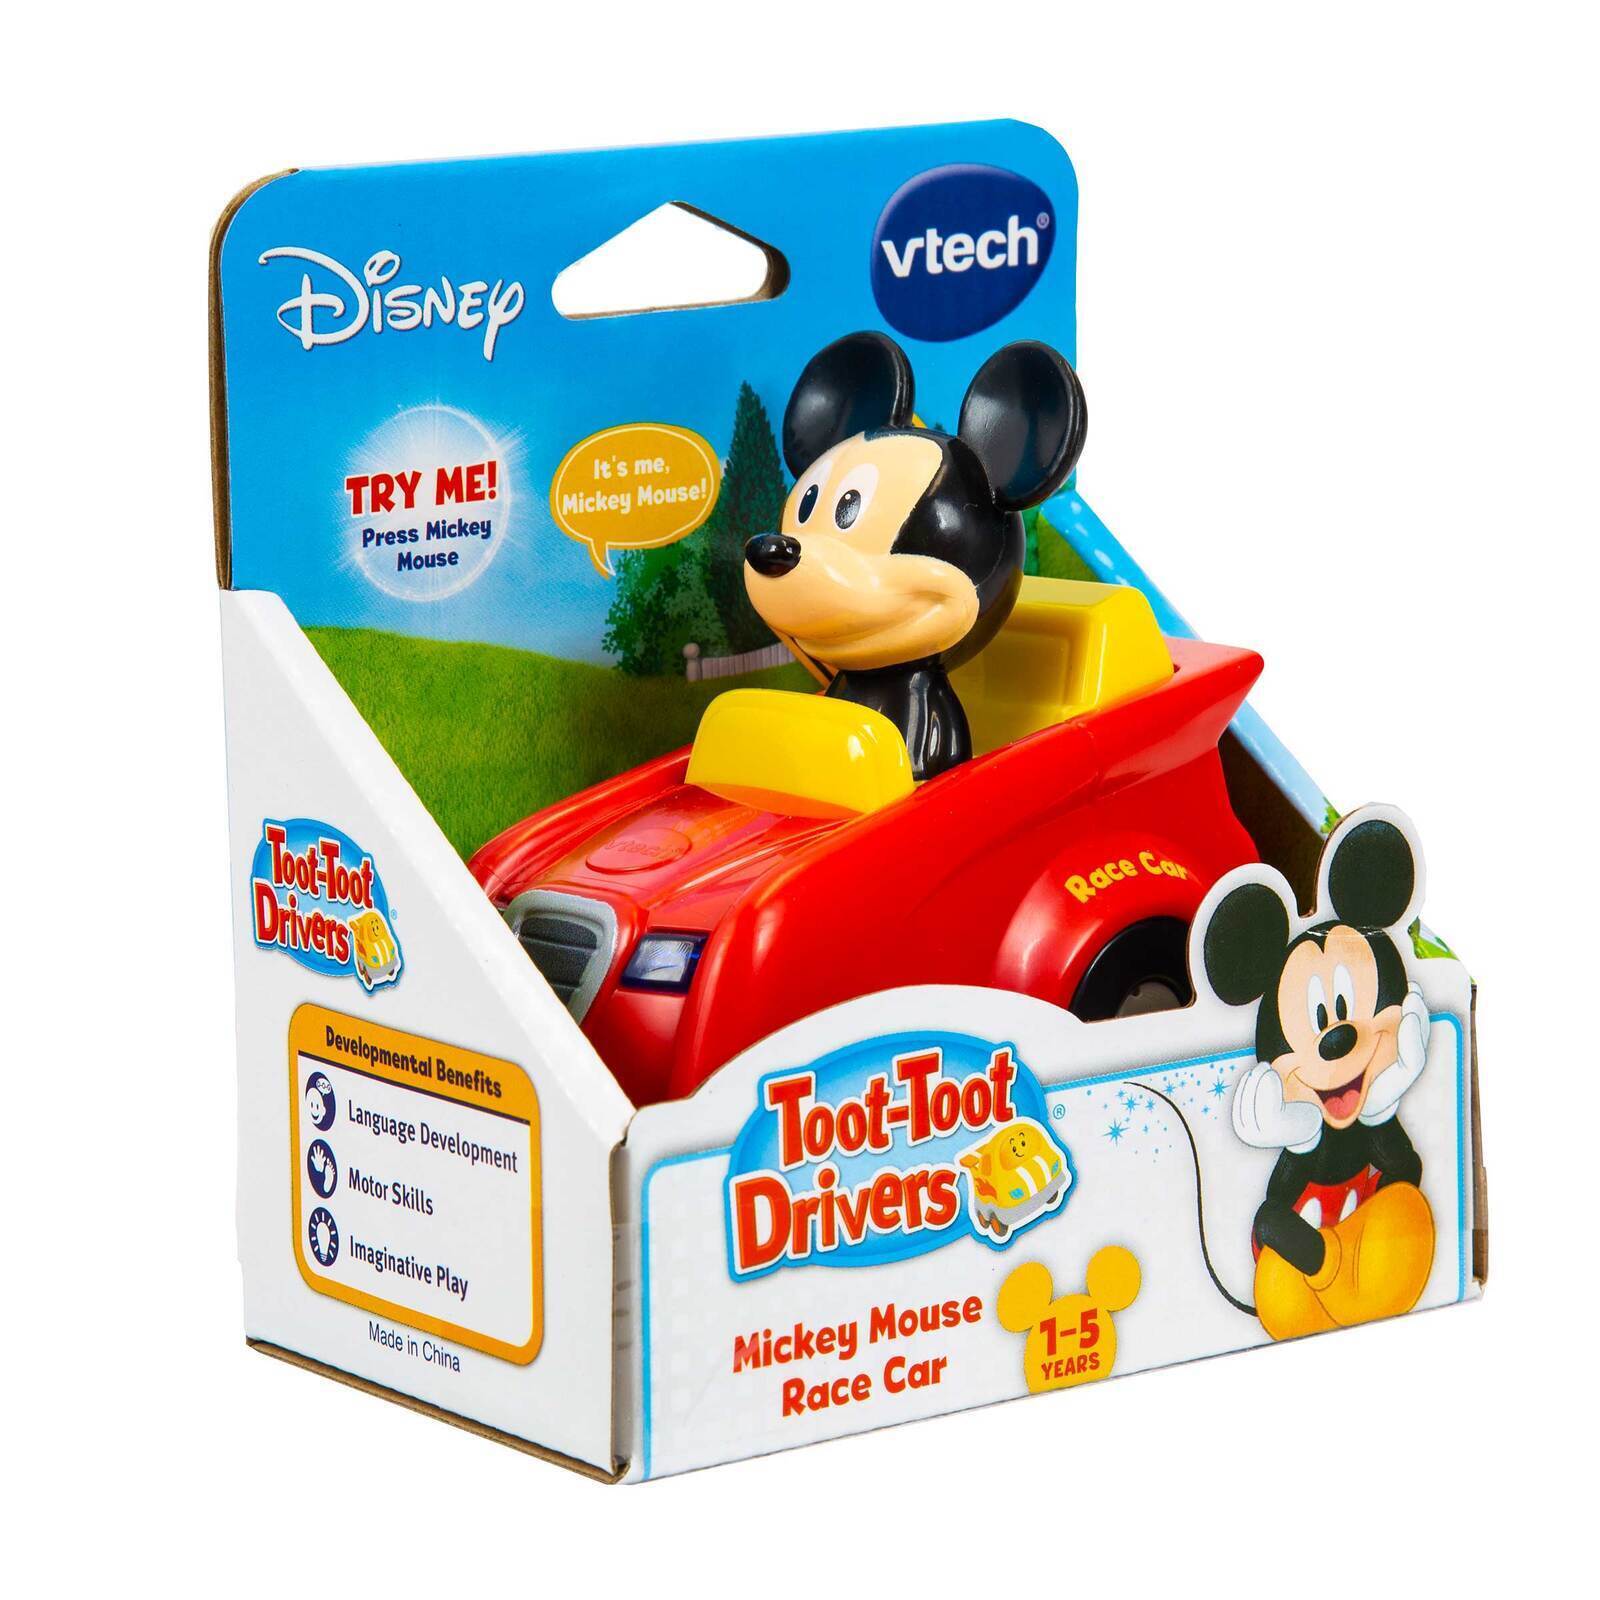 Vtech Drivers Mickey Mouse Race Car